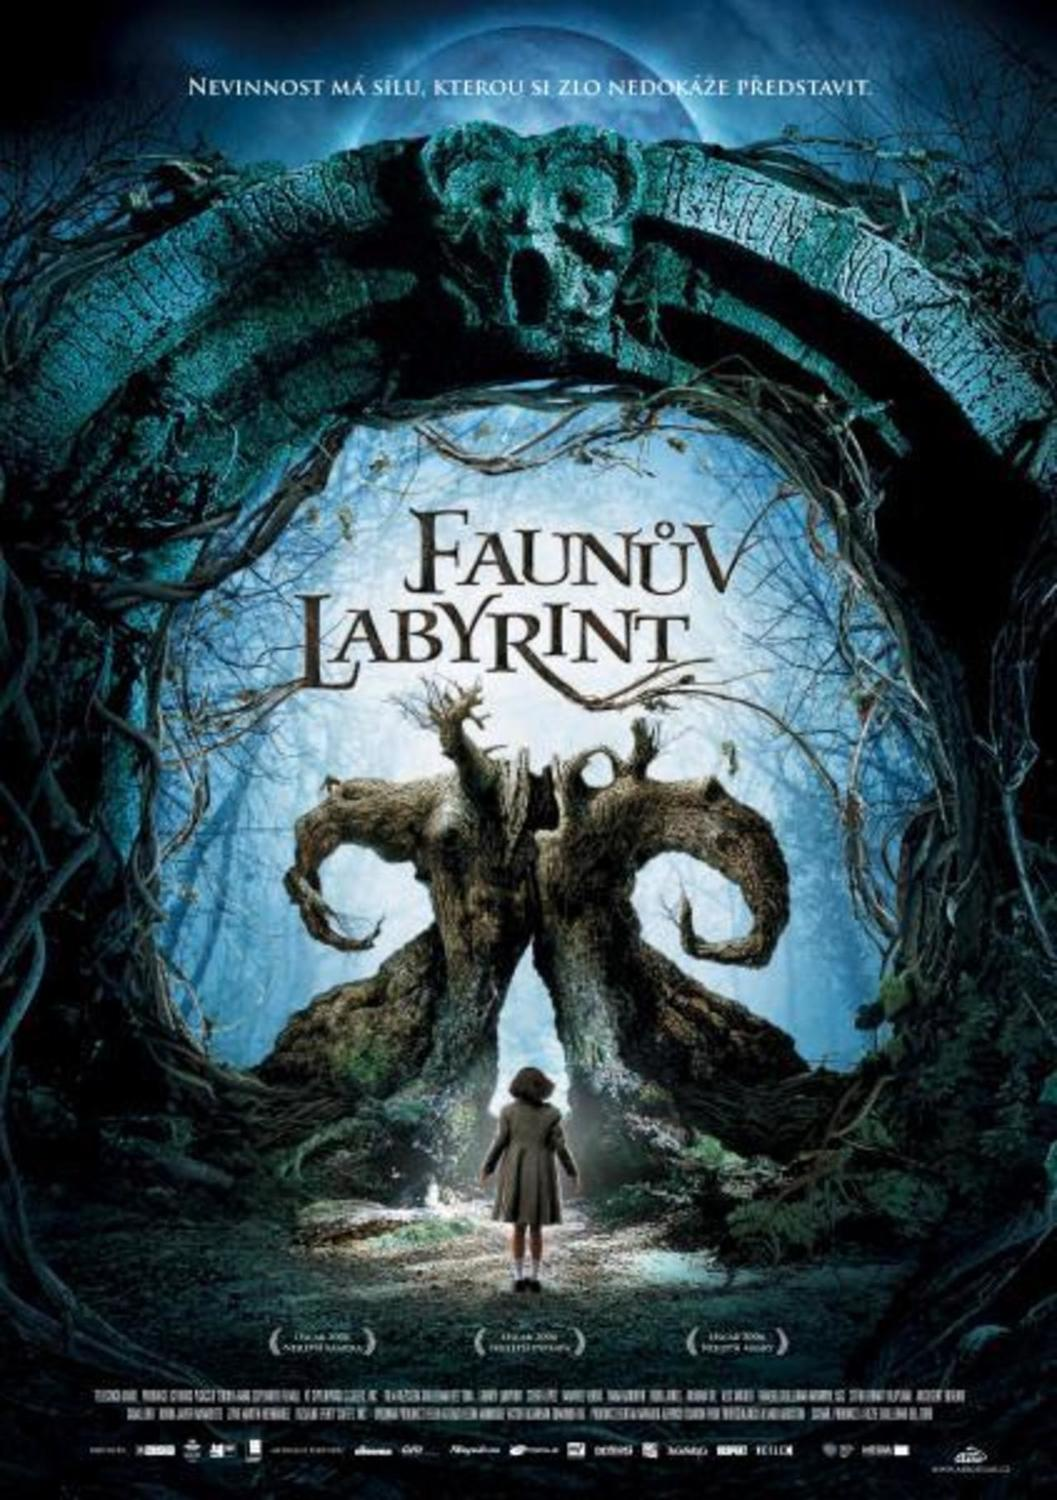 Stiahni si HD Filmy Faunuv labyrint / El Laberinto del Fauno (2006)(CZ)[1080pHD] = CSFD 81%